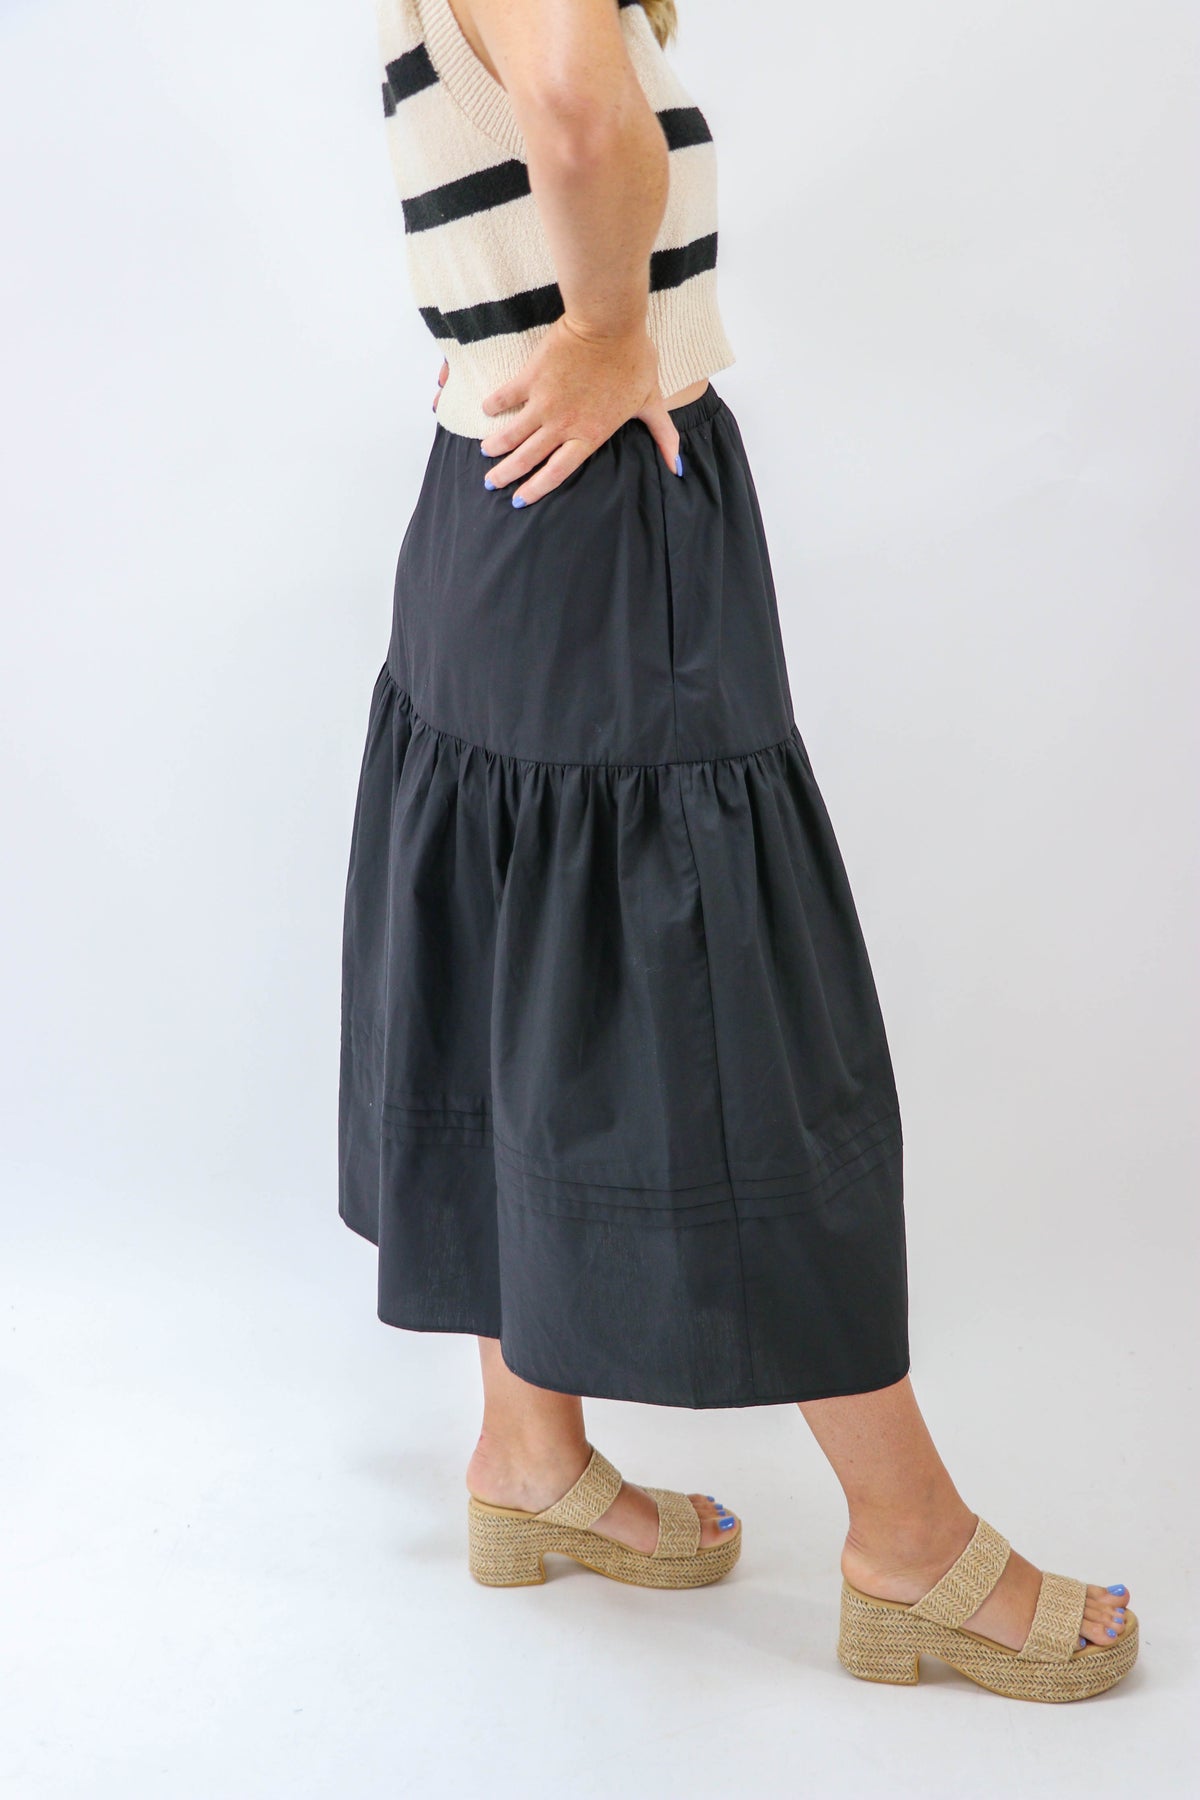 Sugar Lips | Black Cotton Midi Skirt | Sweetest Stitch Online Boutique